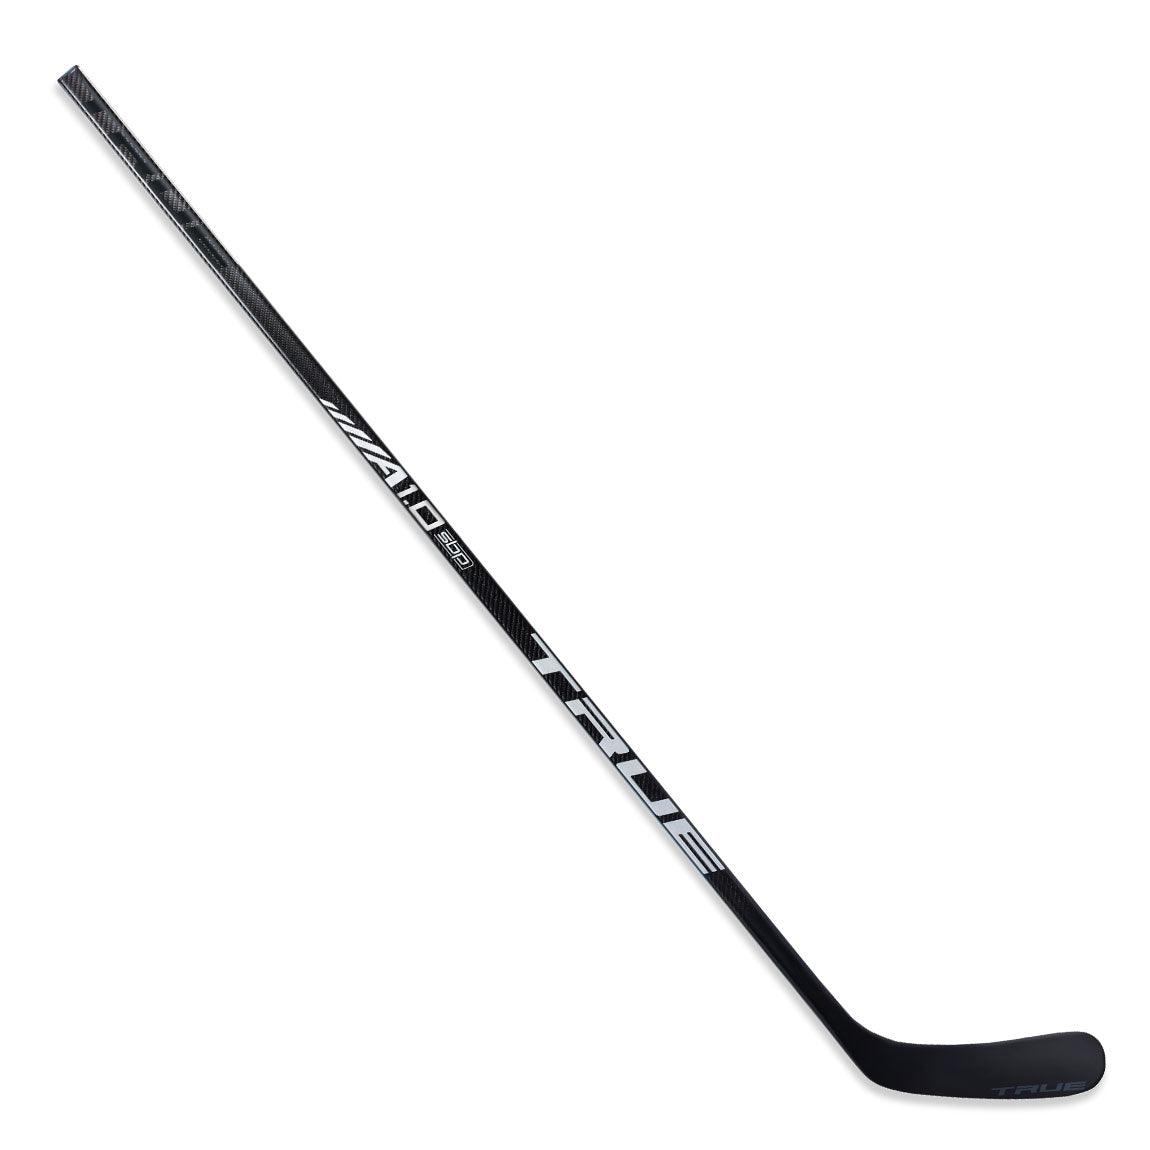 A1.0 SBP Hockey Stick - Intermediate - Sports Excellence